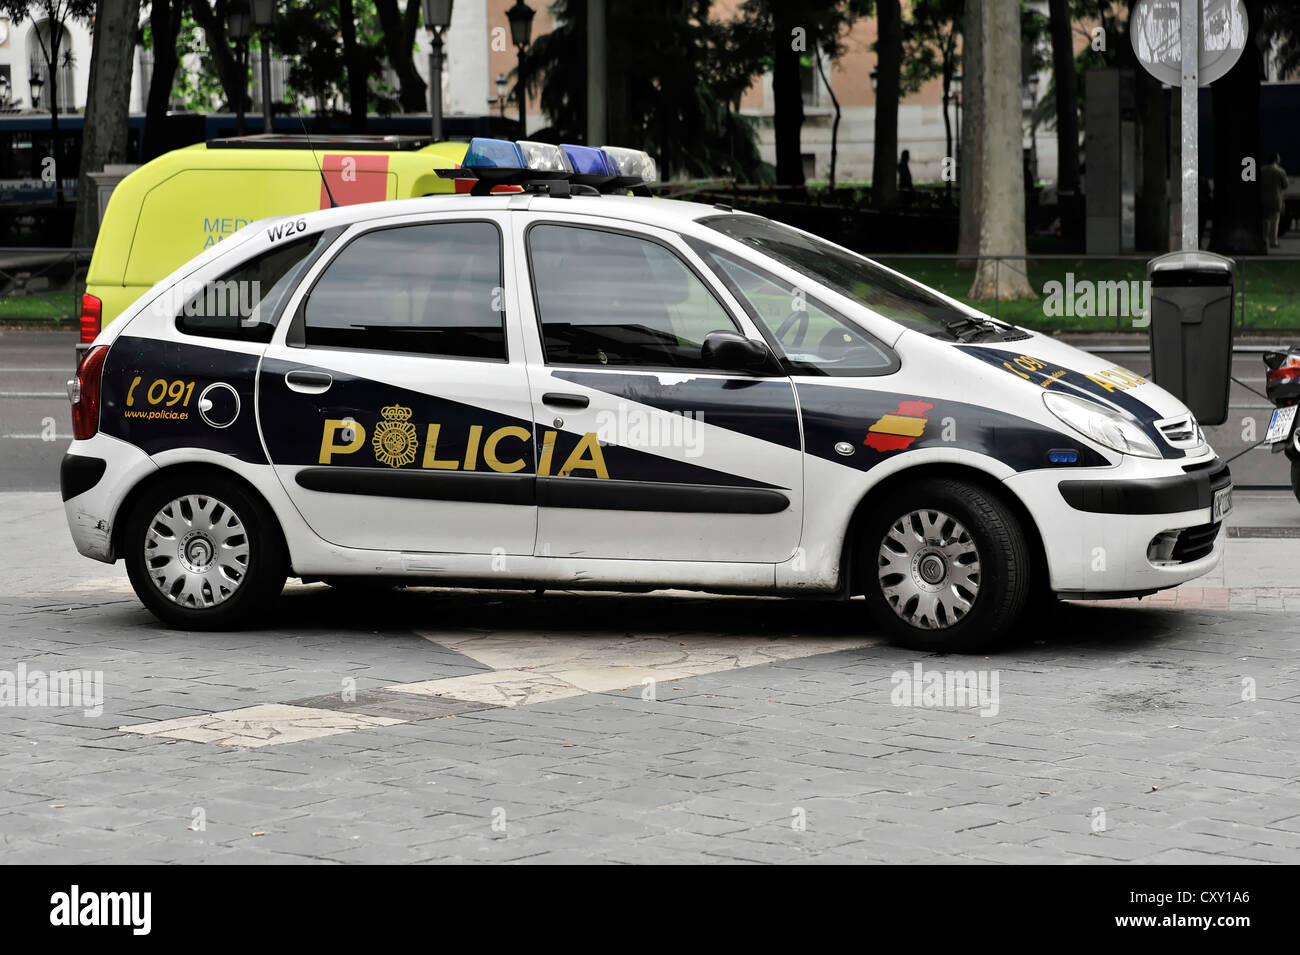 Policia, police car, city centre, Madrid, Spain, Europe Stock Photo